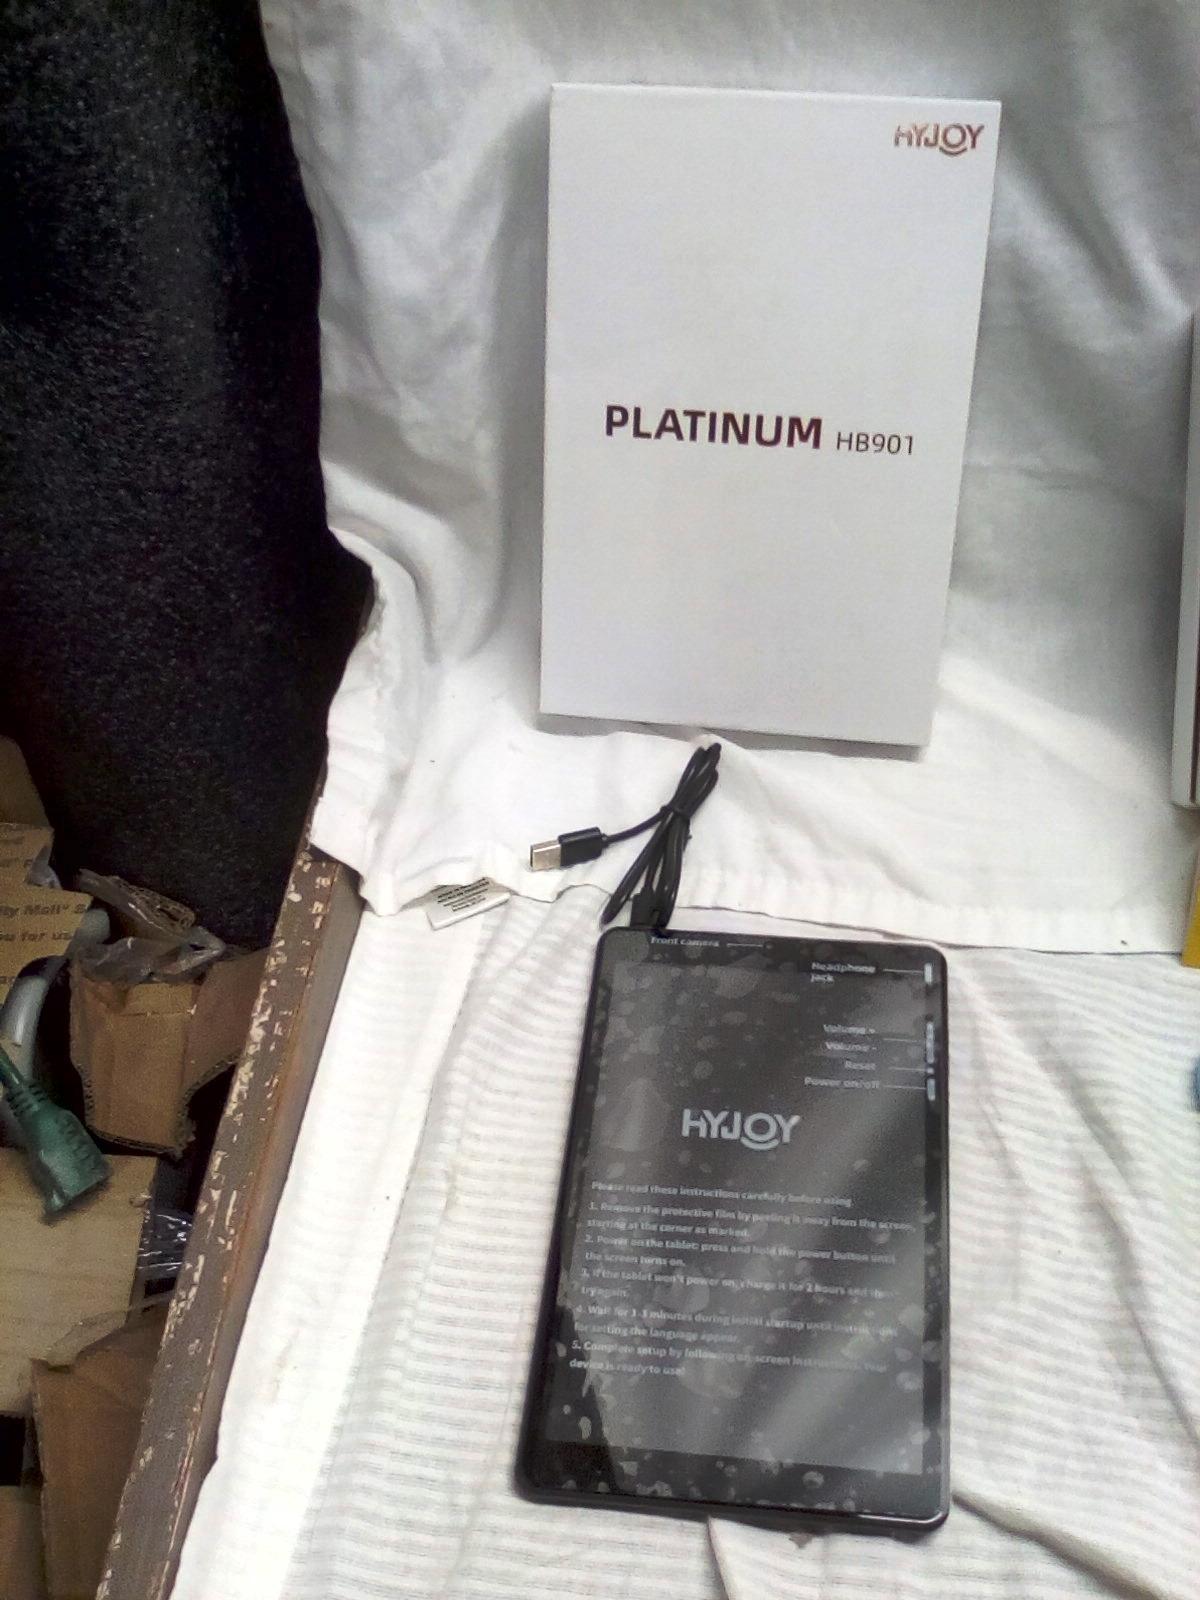 HyJoy Platinum Hb901 Tablet